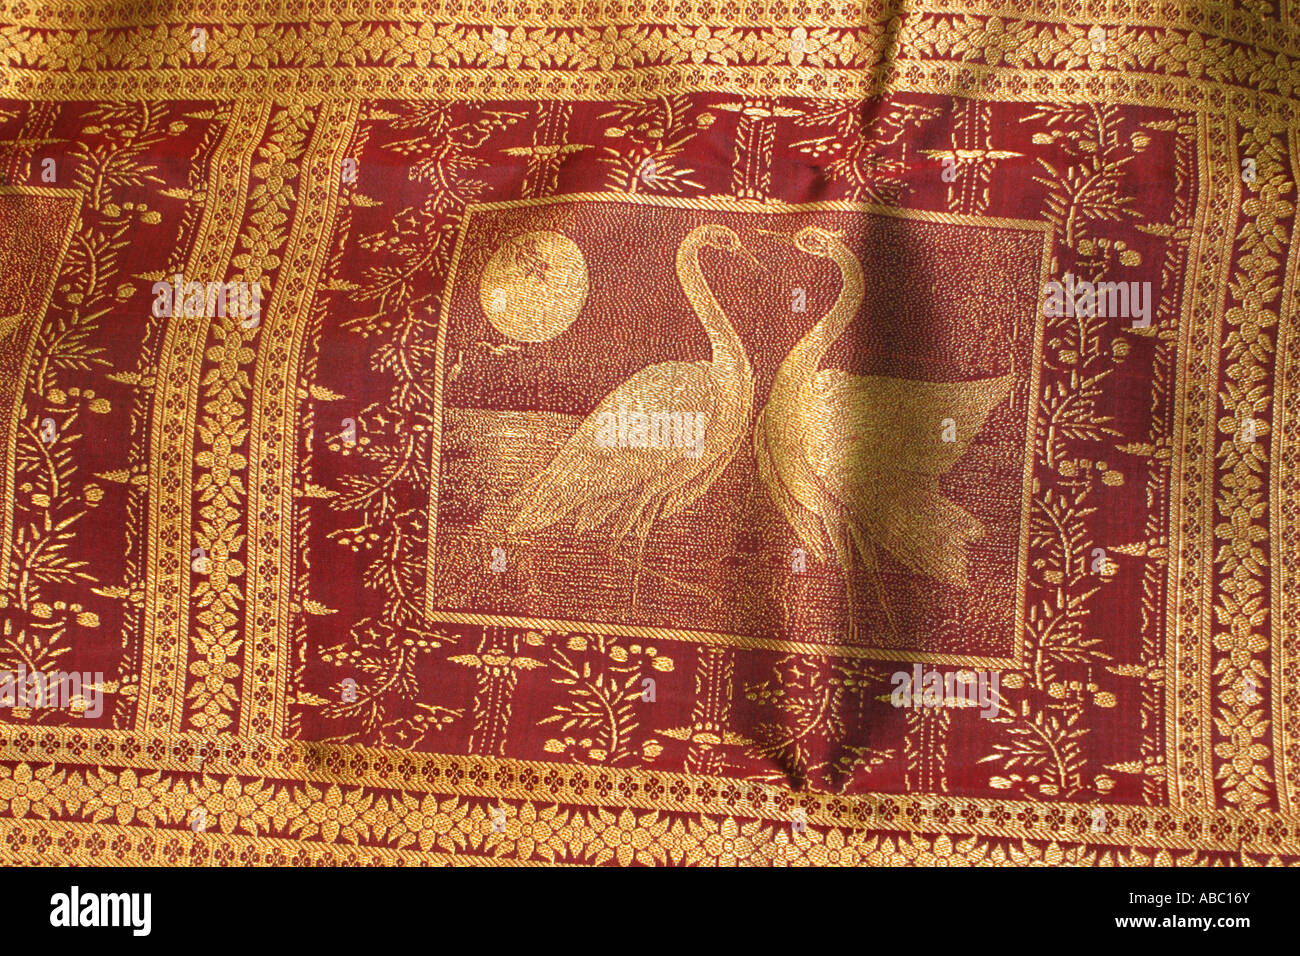 Sari pattern hi-res stock photography and images - Alamy